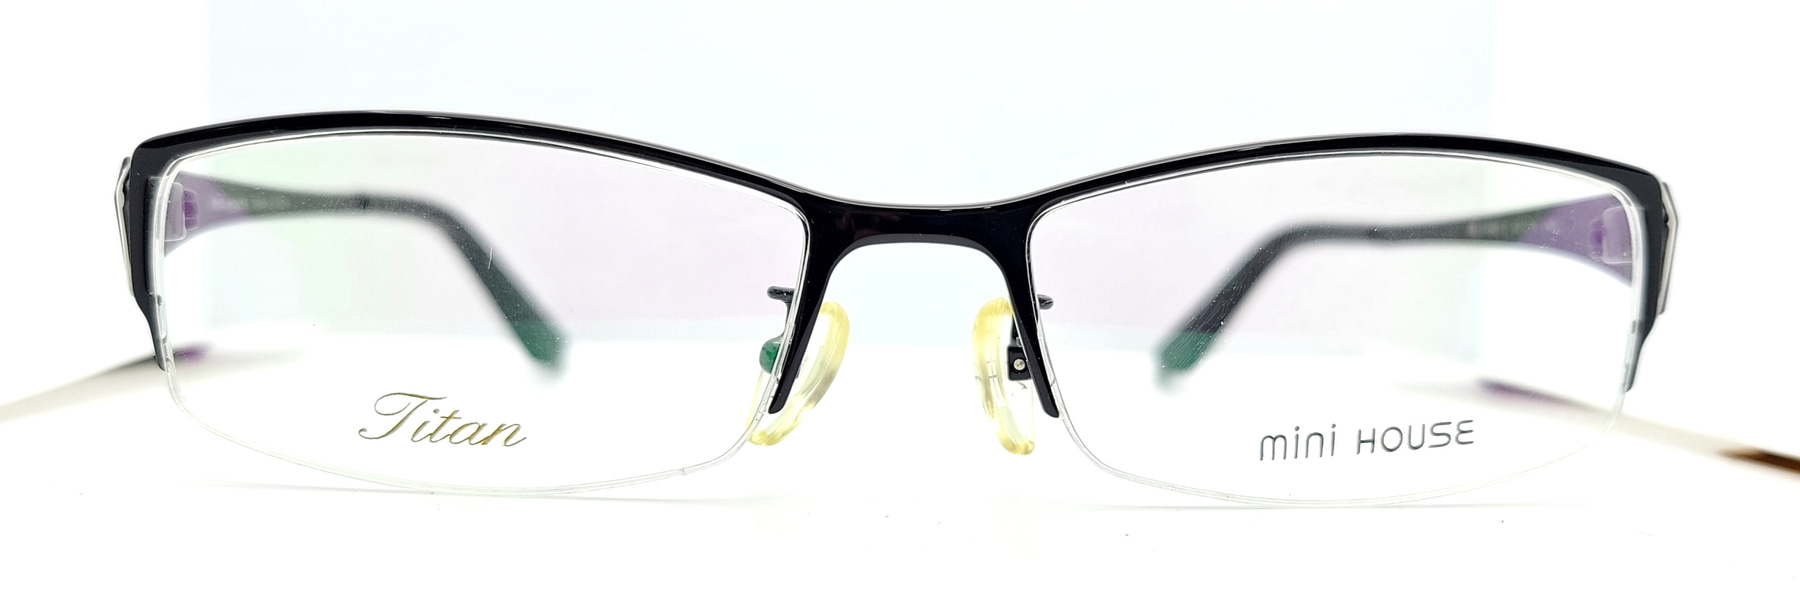 MINIHOUSE M-1098-1, Korean glasses, sunglasses, eyeglasses, glasses